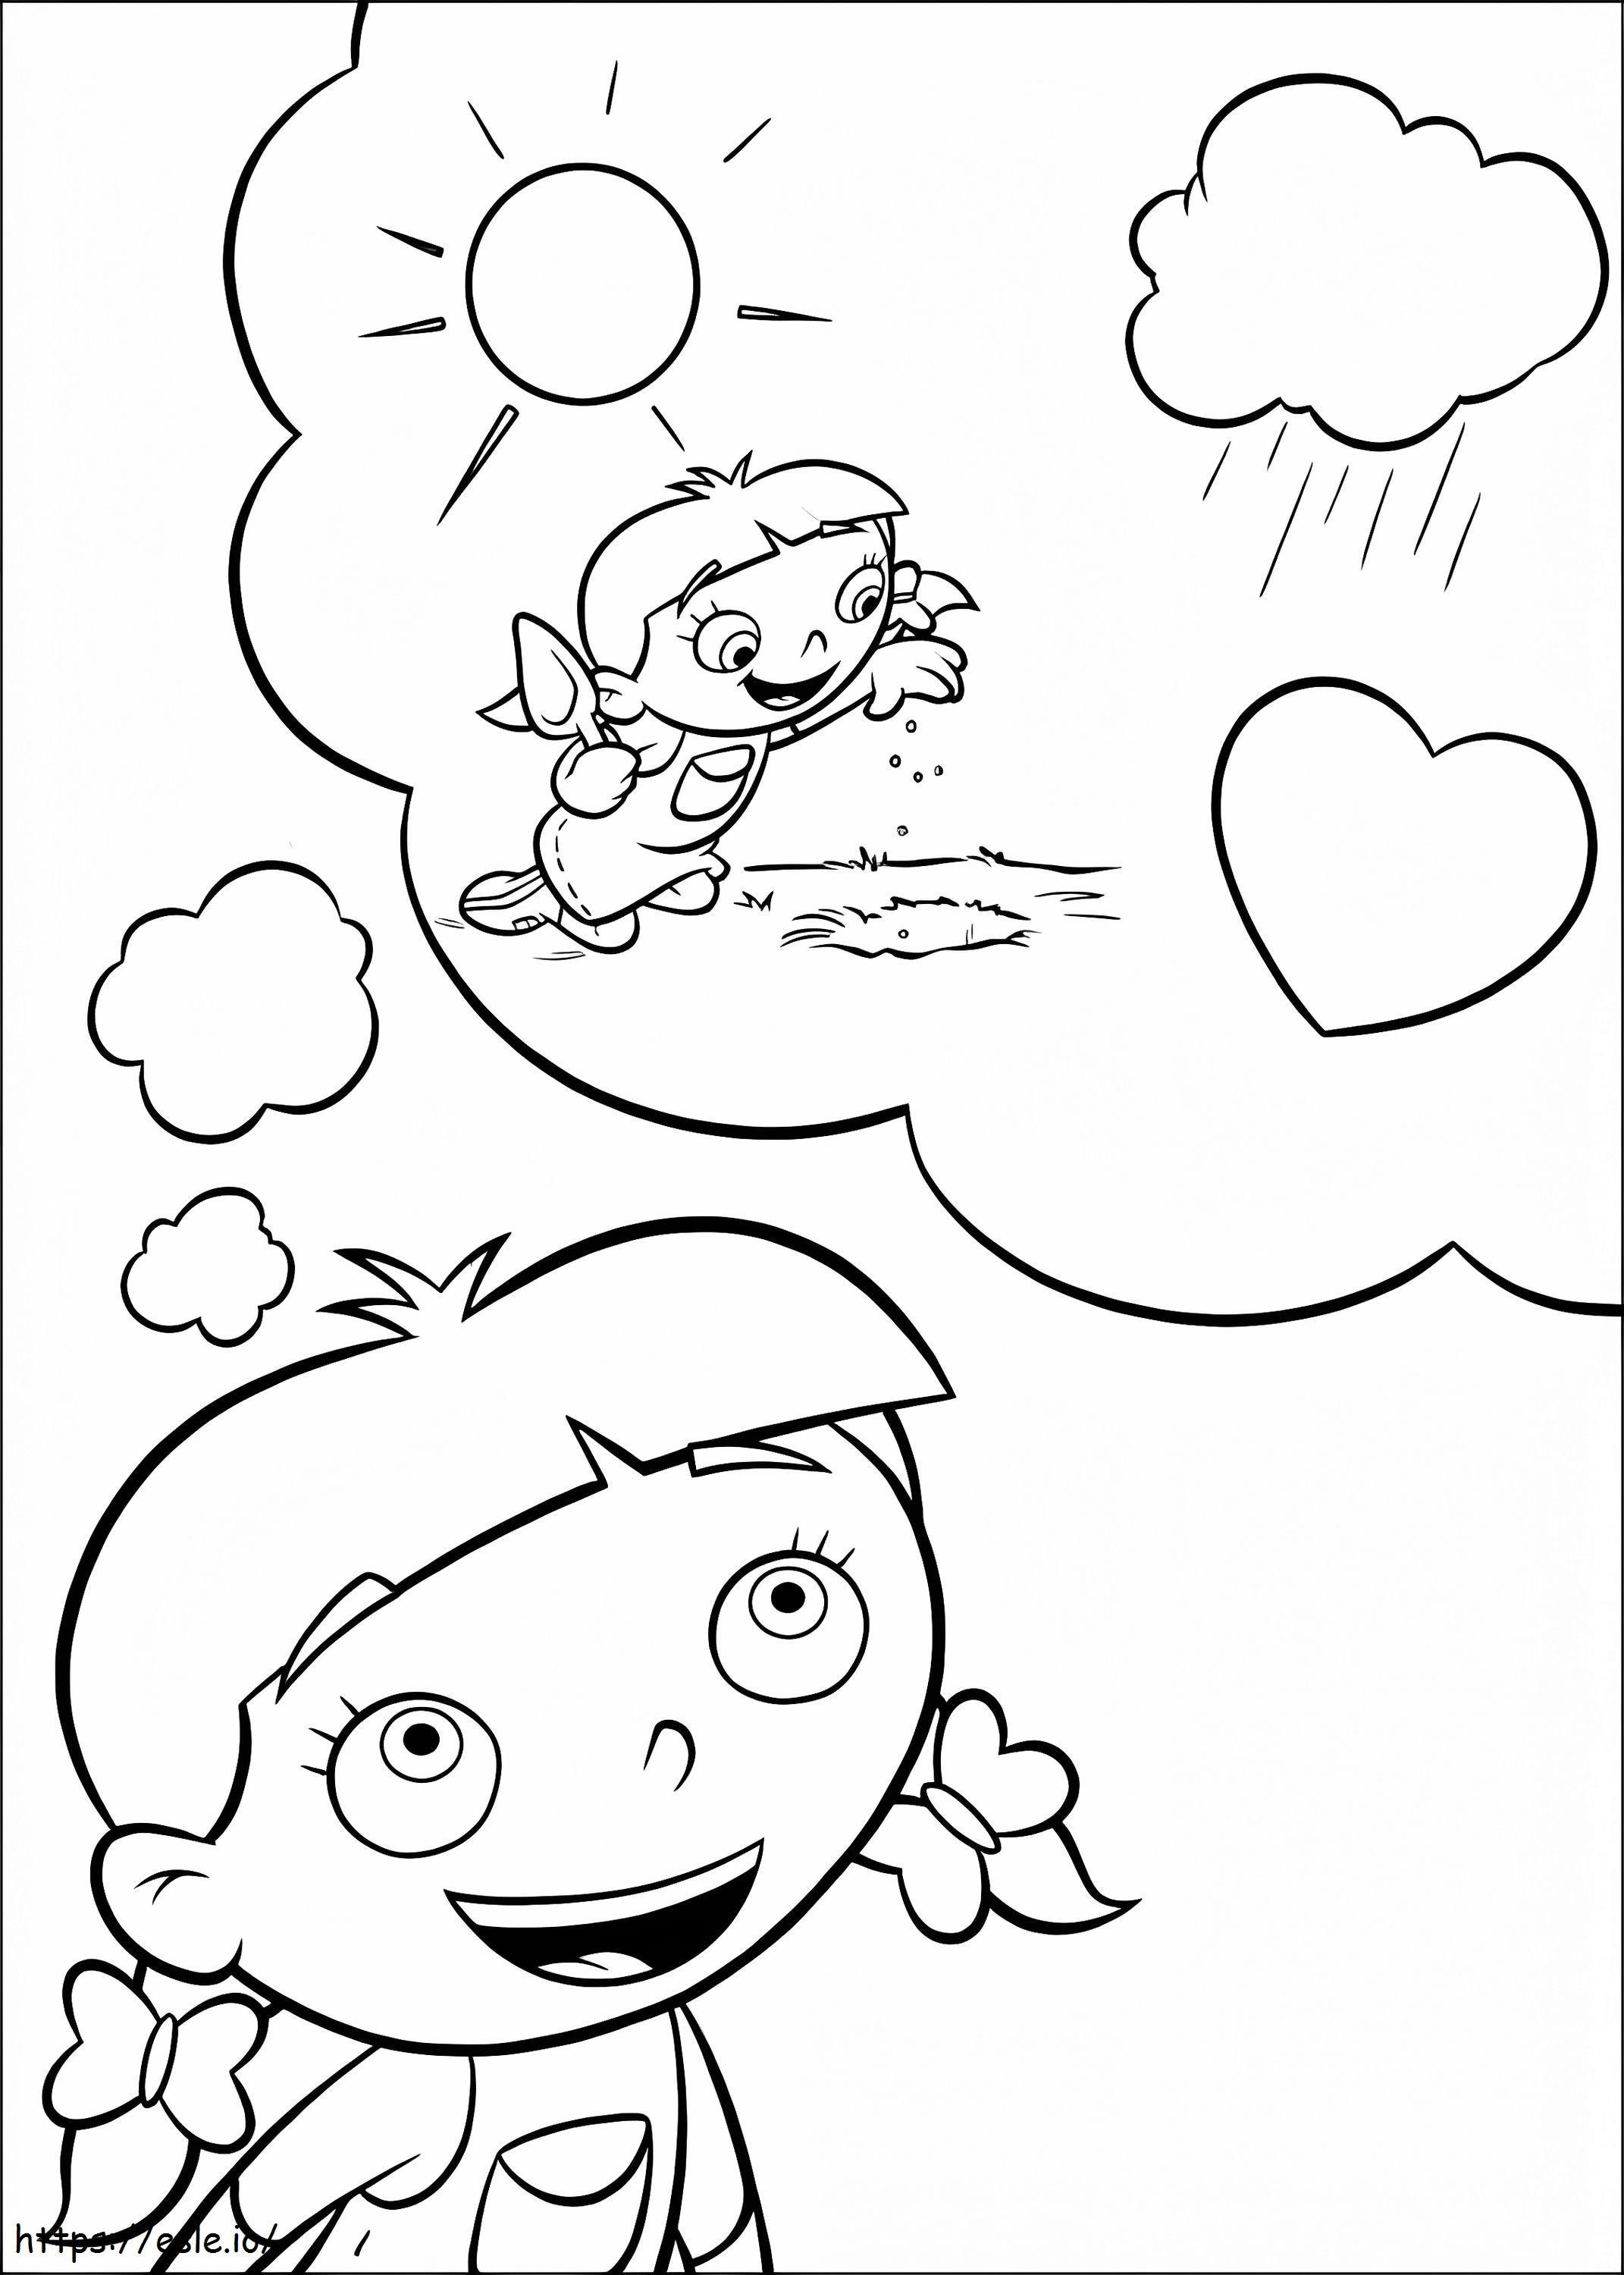 Annie Of Little Einsteins coloring page